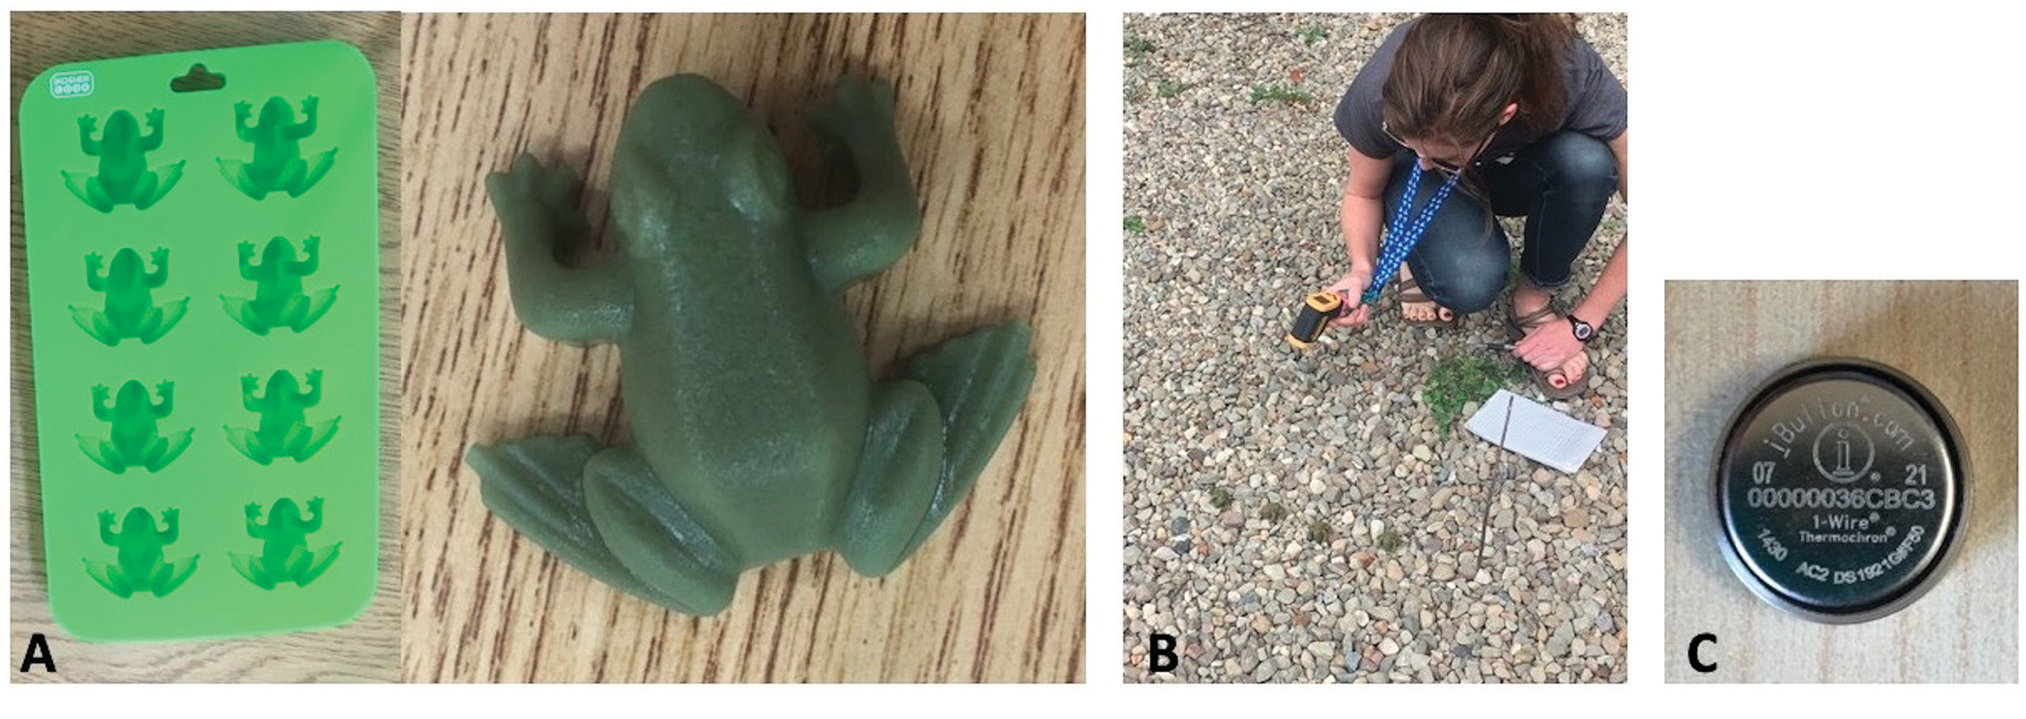 |	FIGURE 1: Agar model frogs (A) used to record temperature via infrared (B) or iButton (C) temperature sensors.